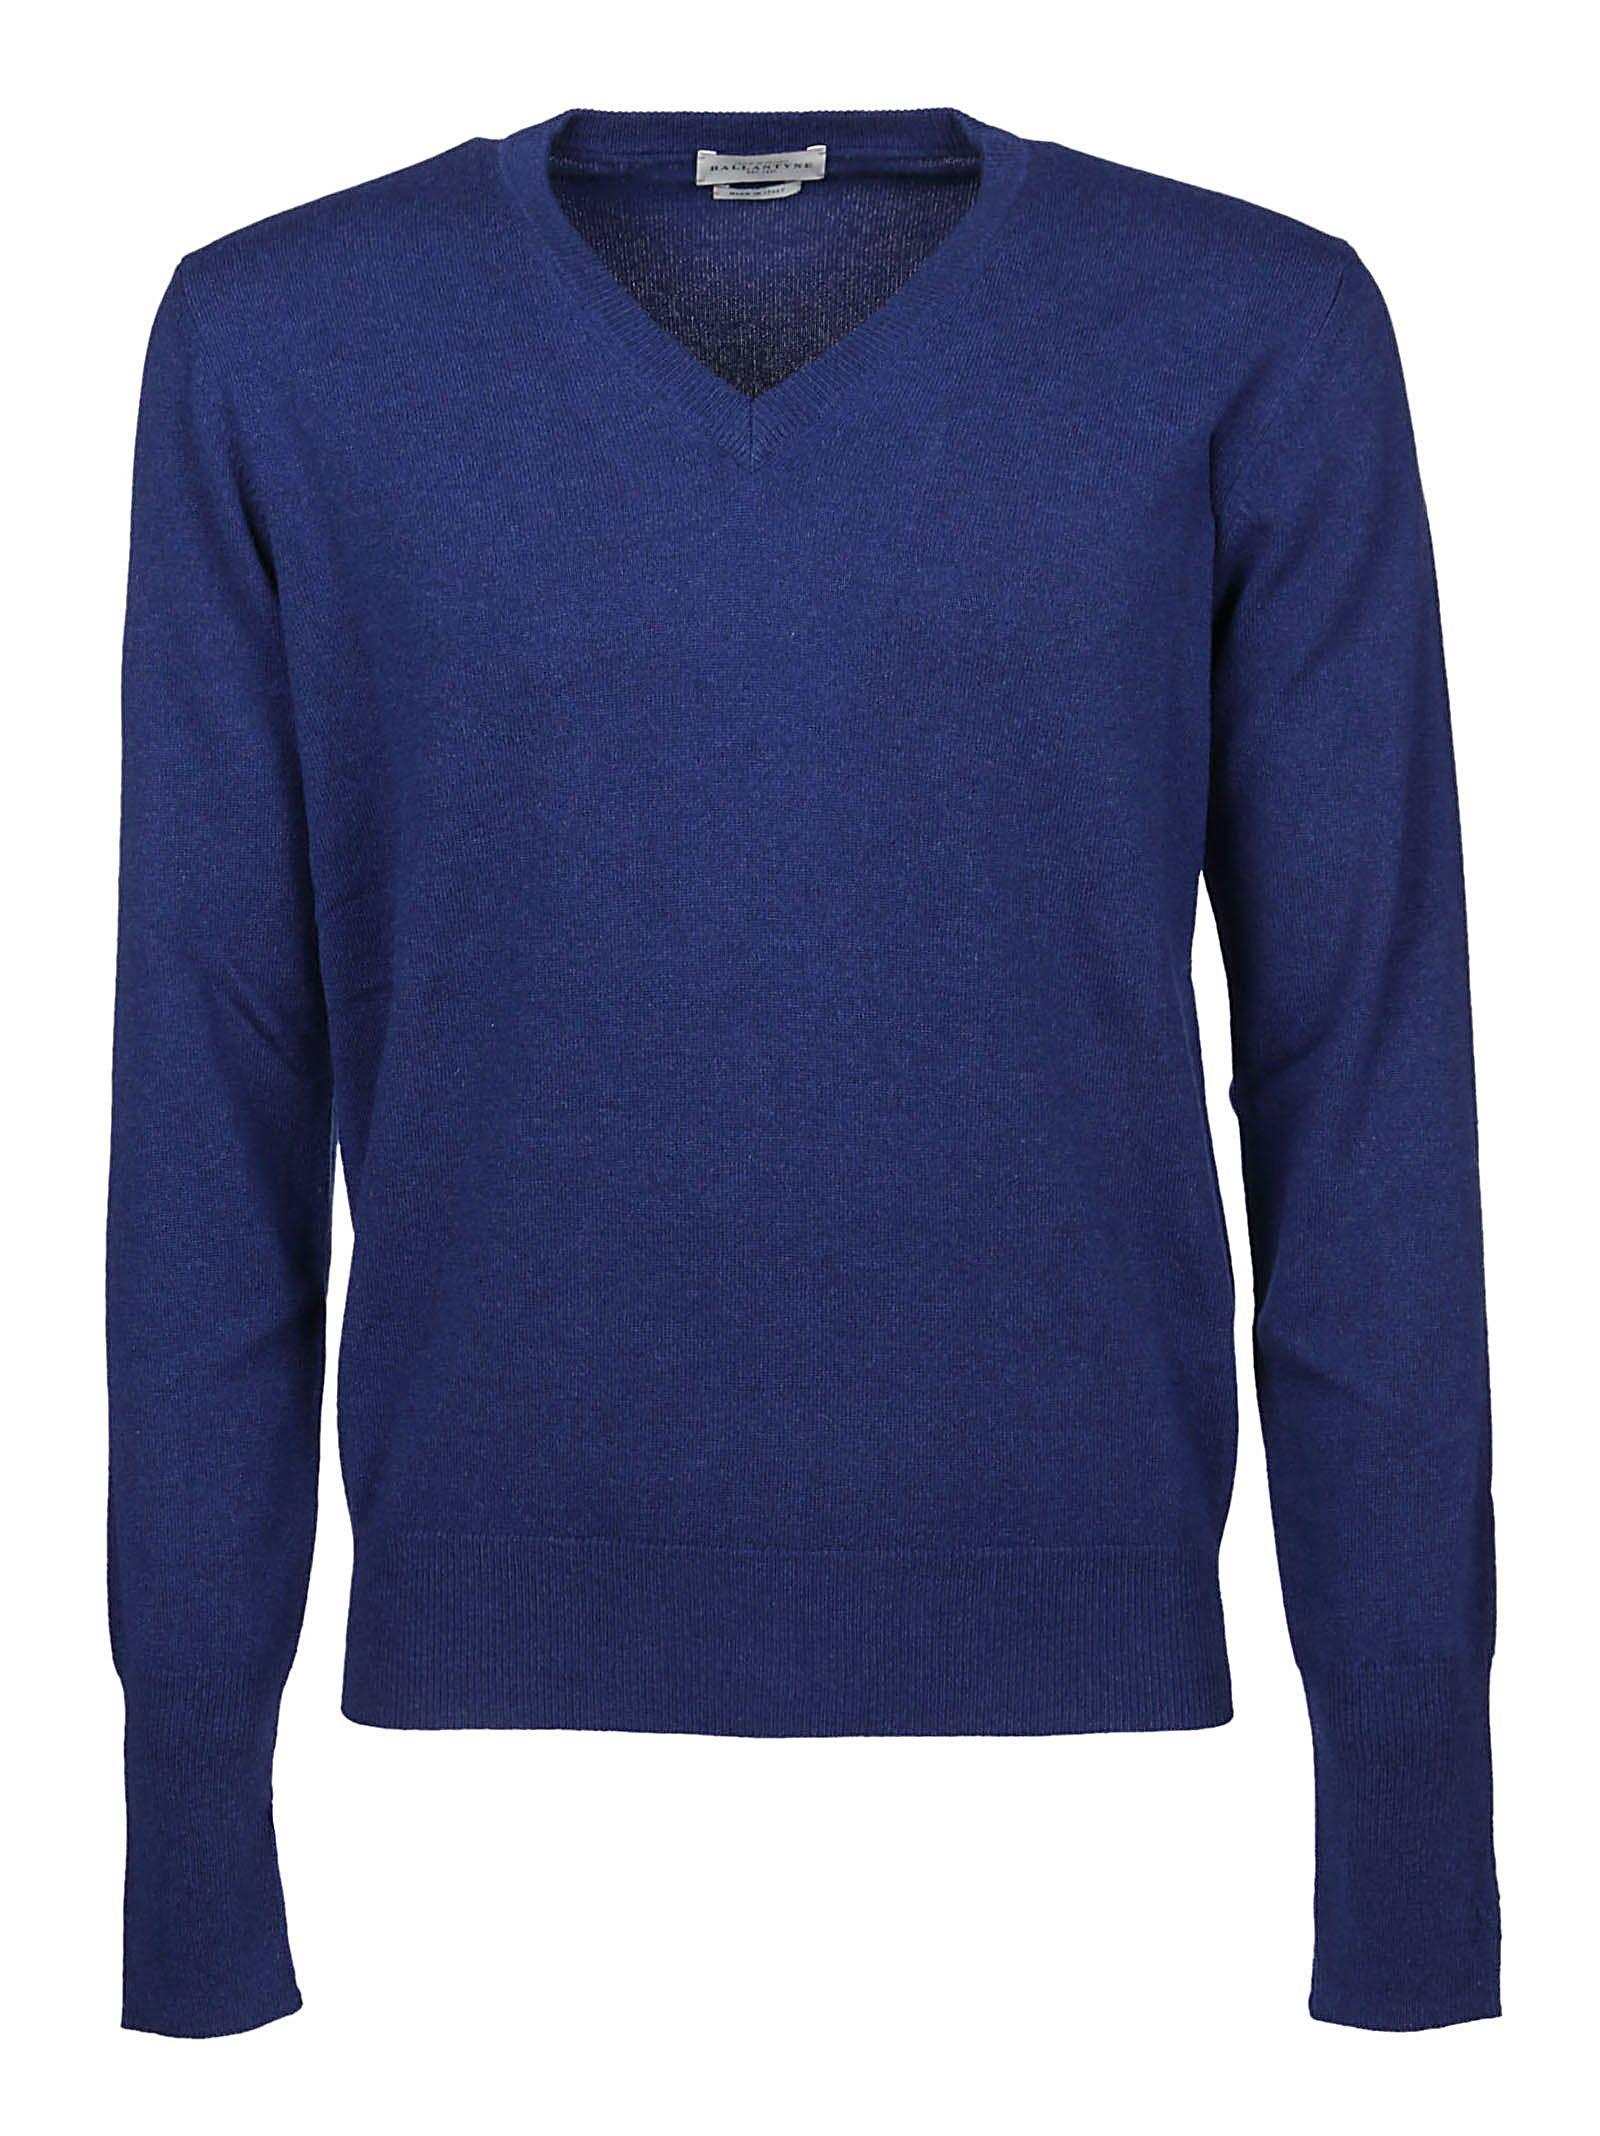 Ballantyne Blue Cashmere Sweater for Men - Lyst